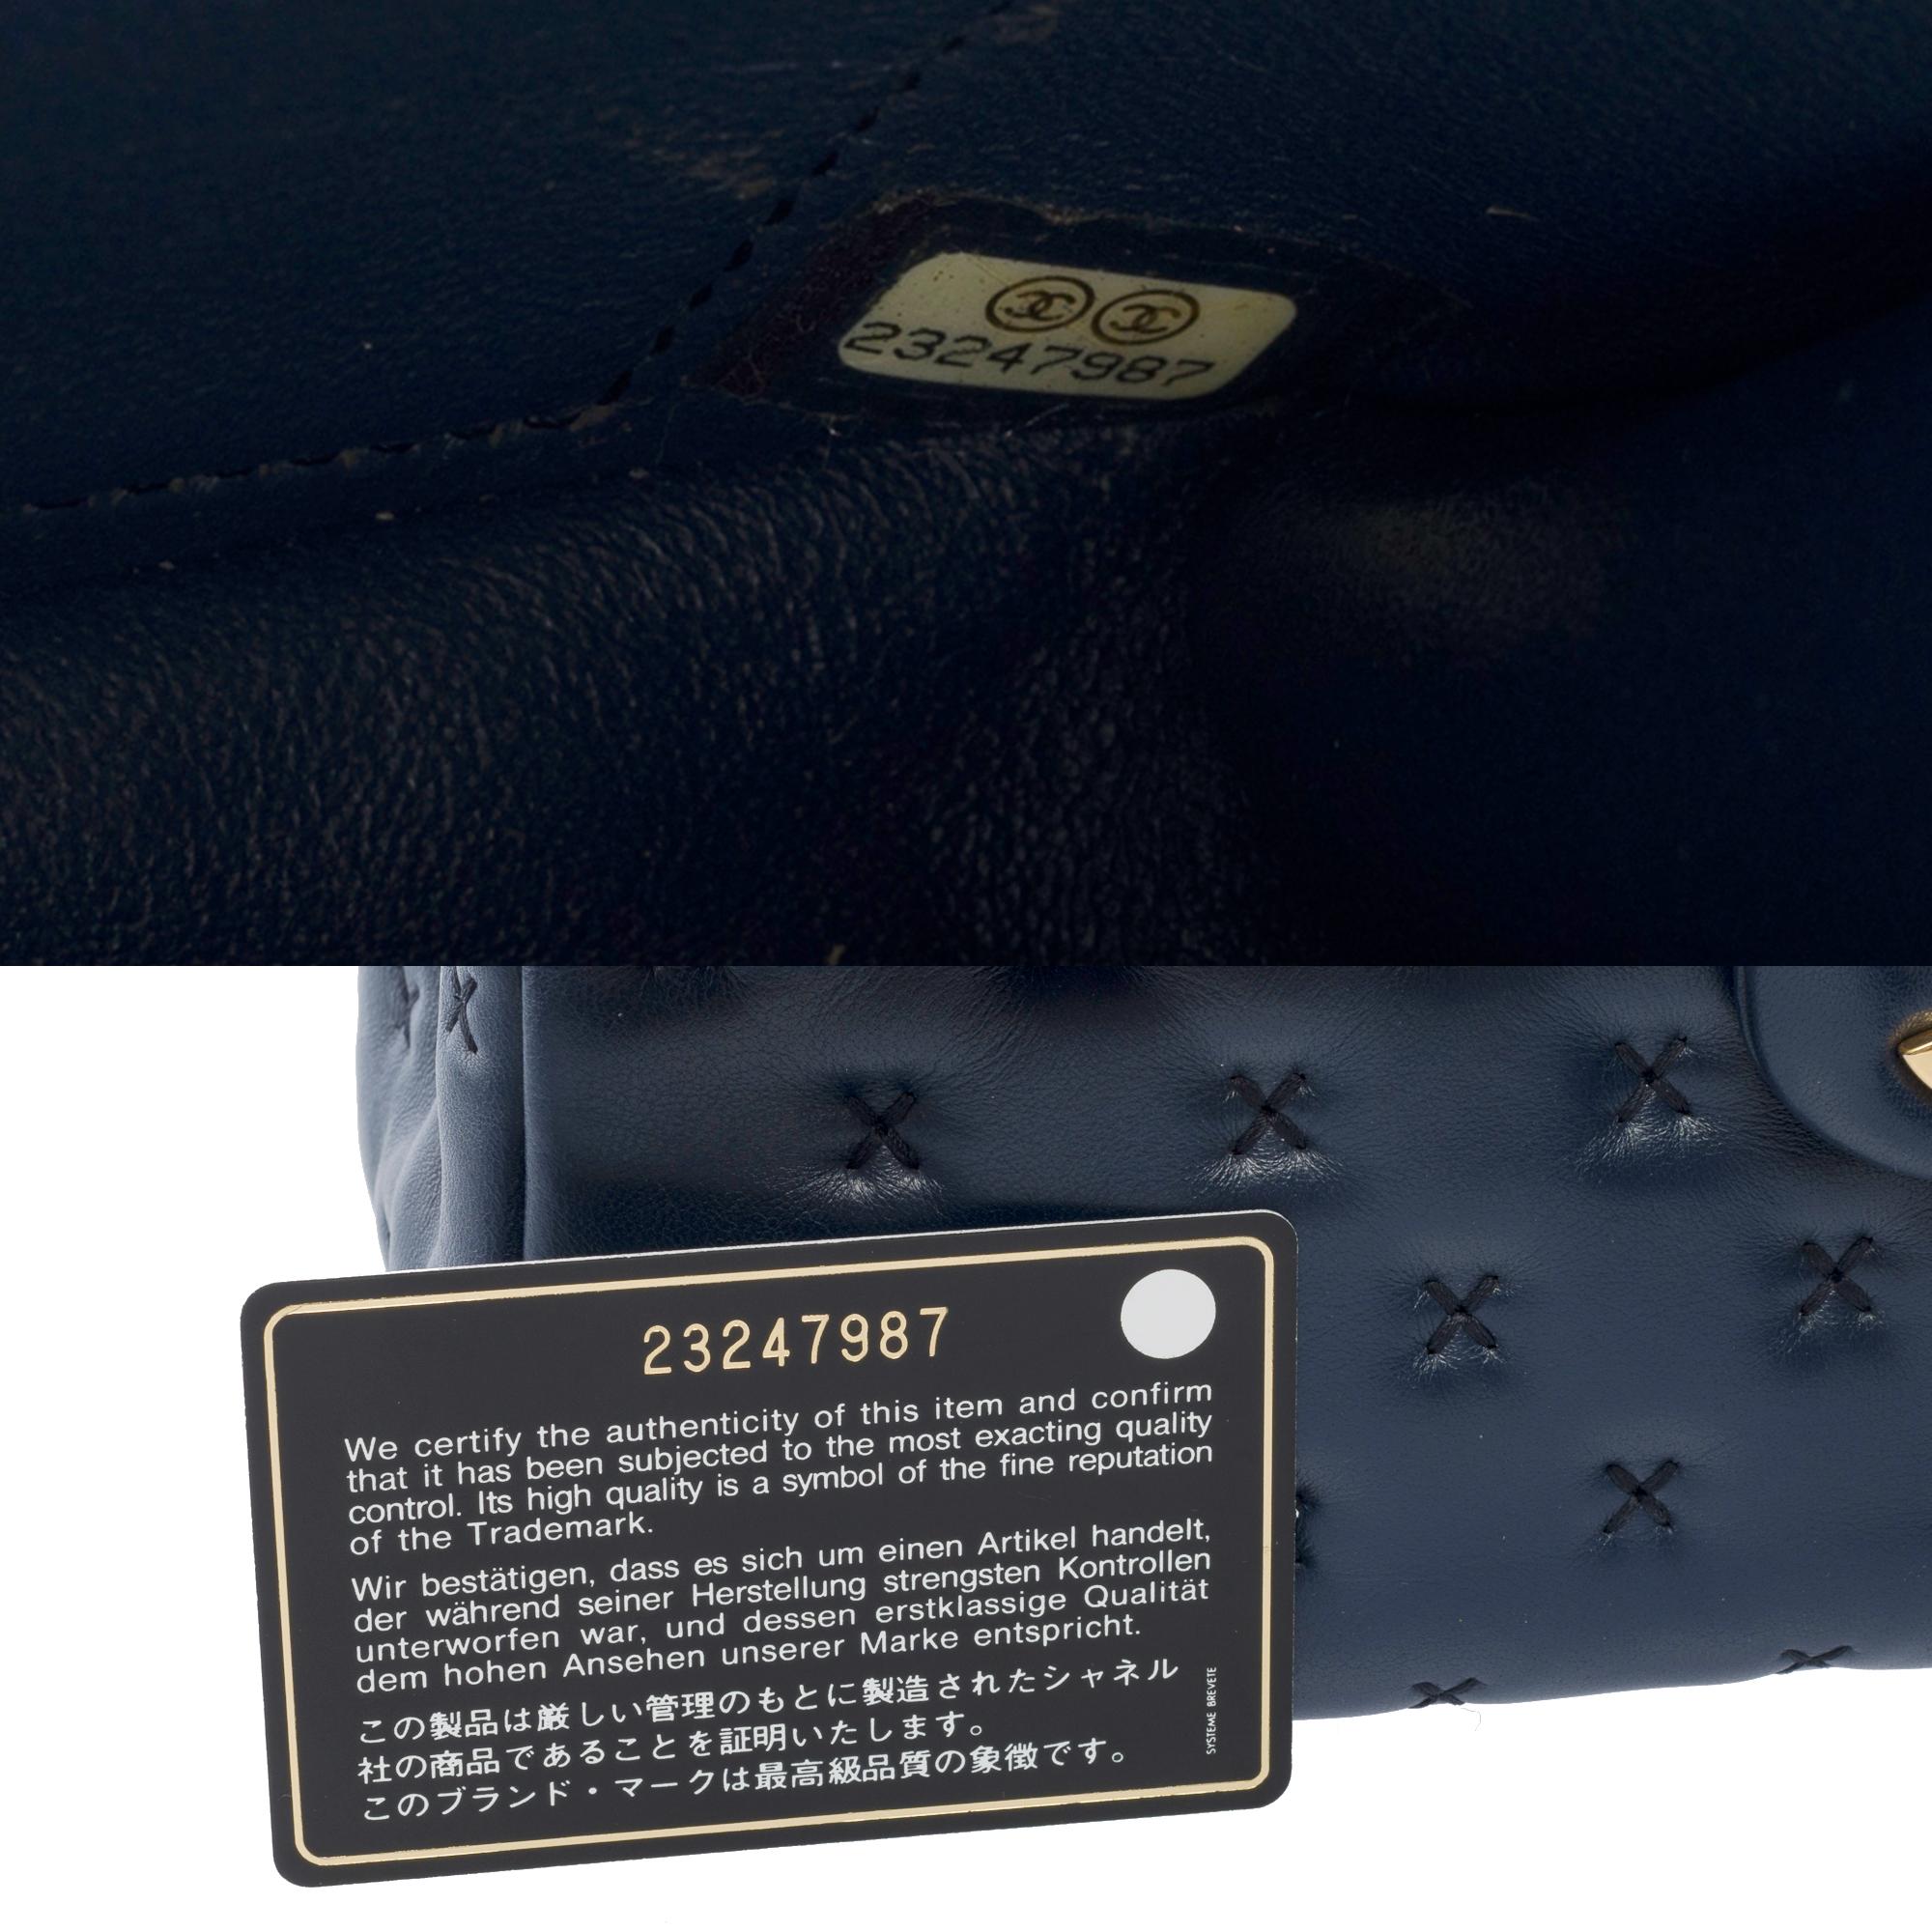 FW2016 Paris-Rome- Chanel Coco handle handbag in Navy blue lambskin leather, GHW 2